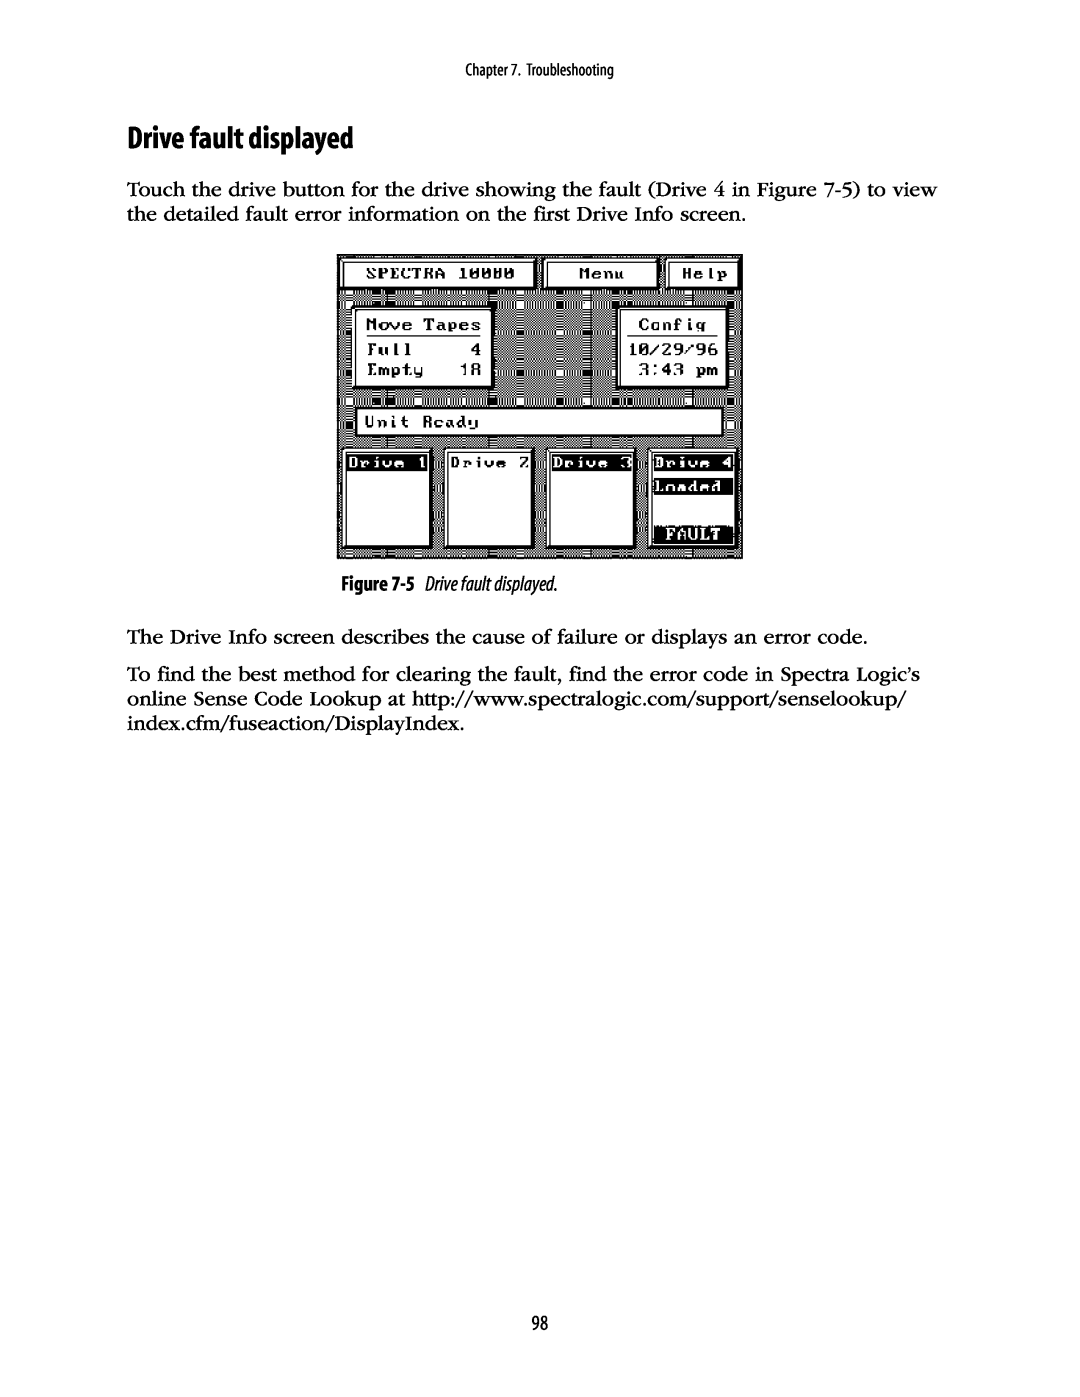 Spectra Logic 10000 manual 5 Drive fault displayed 